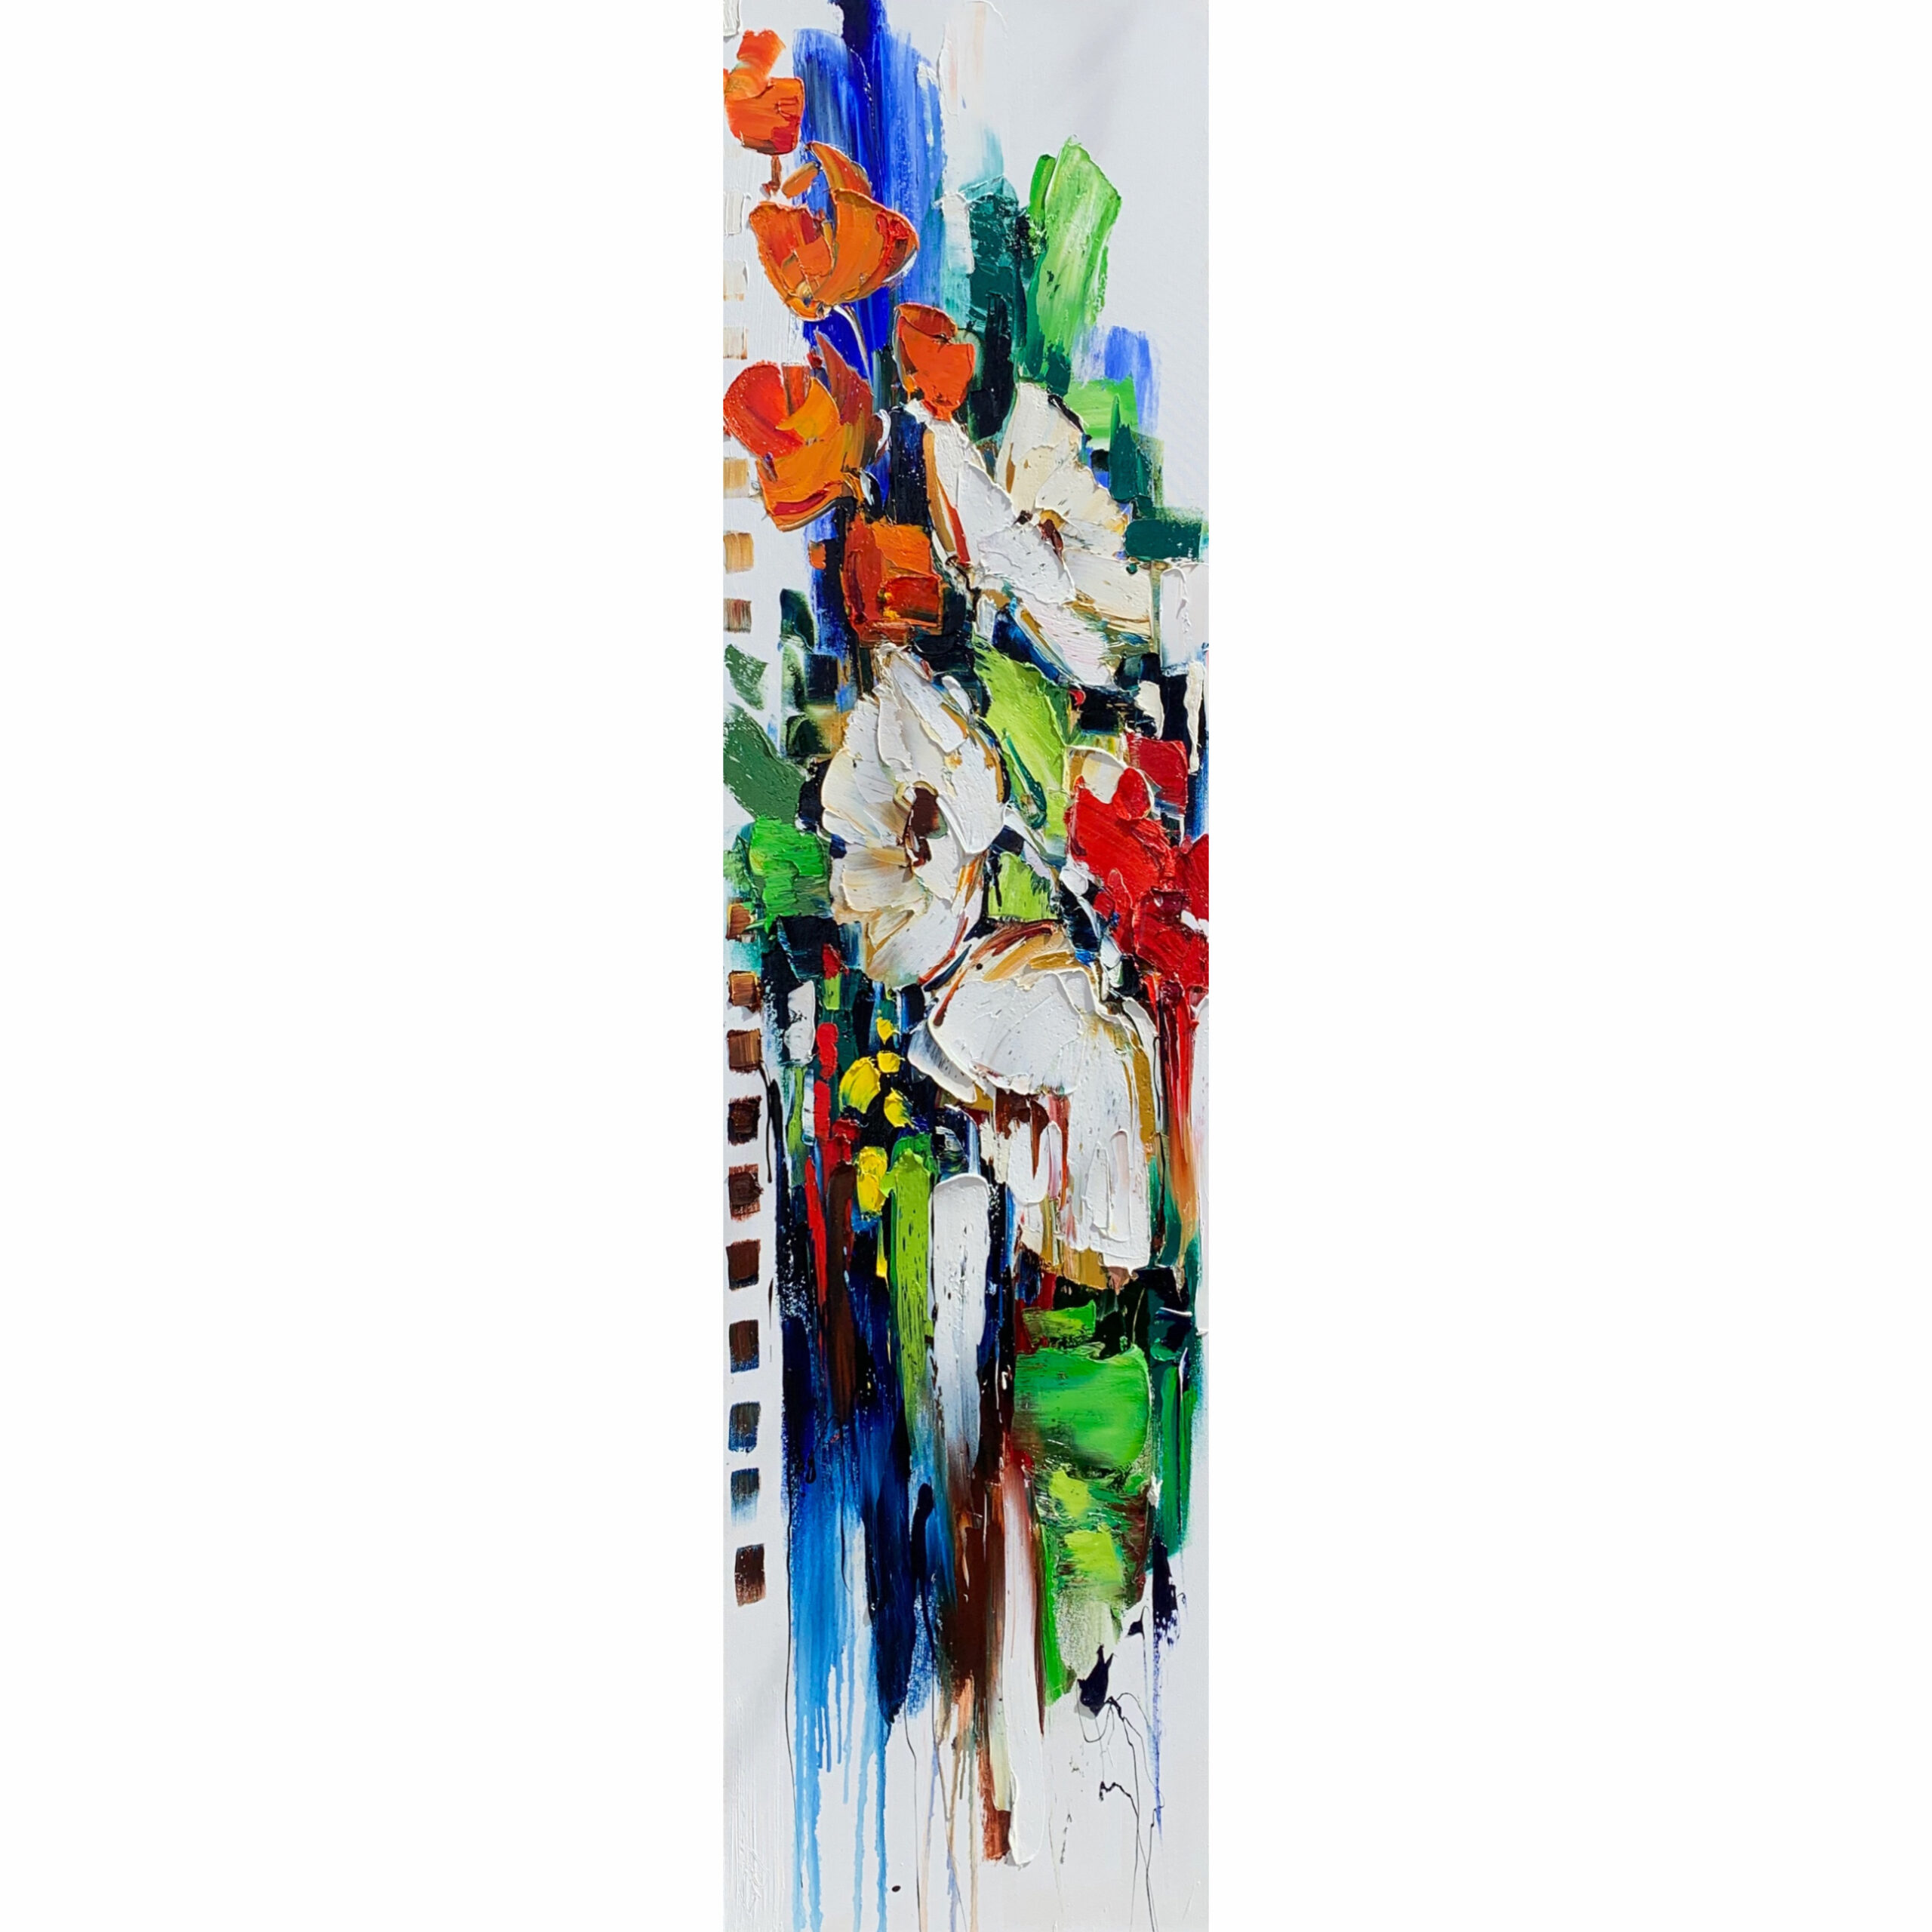 Shall We Say, mixed media floral painting by Kimberly Kiel | Effusion Art Gallery, Invermere BC